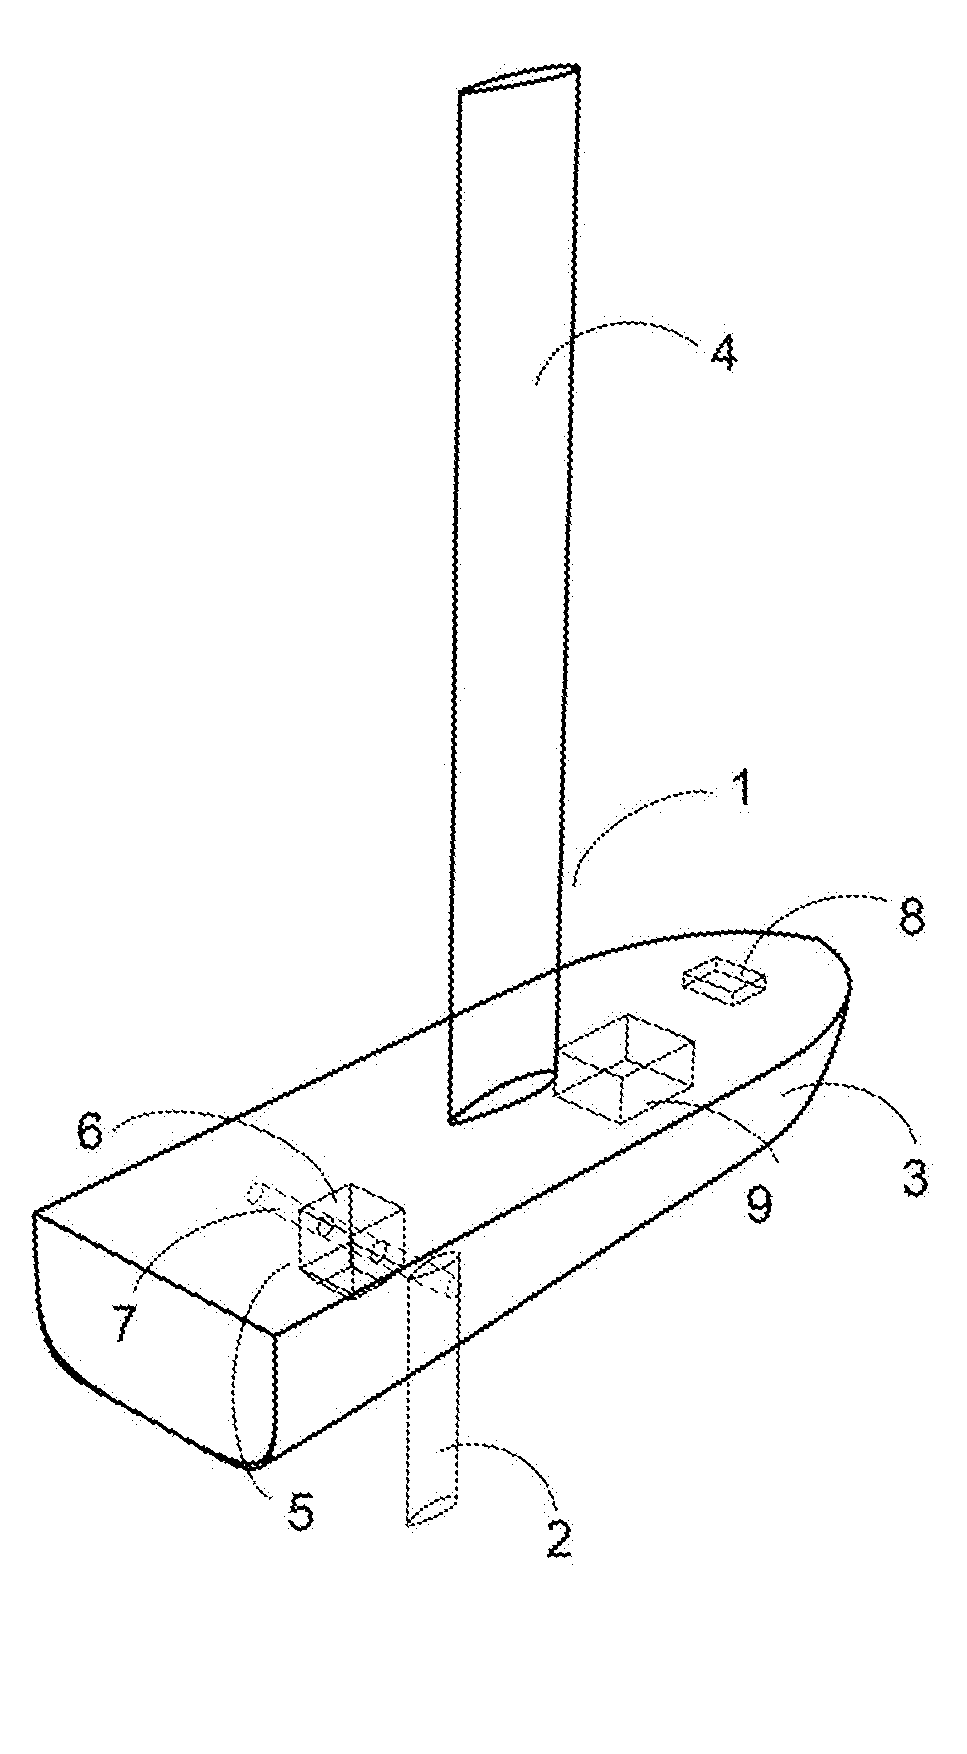 Internally actuated autonomous sailing buoy